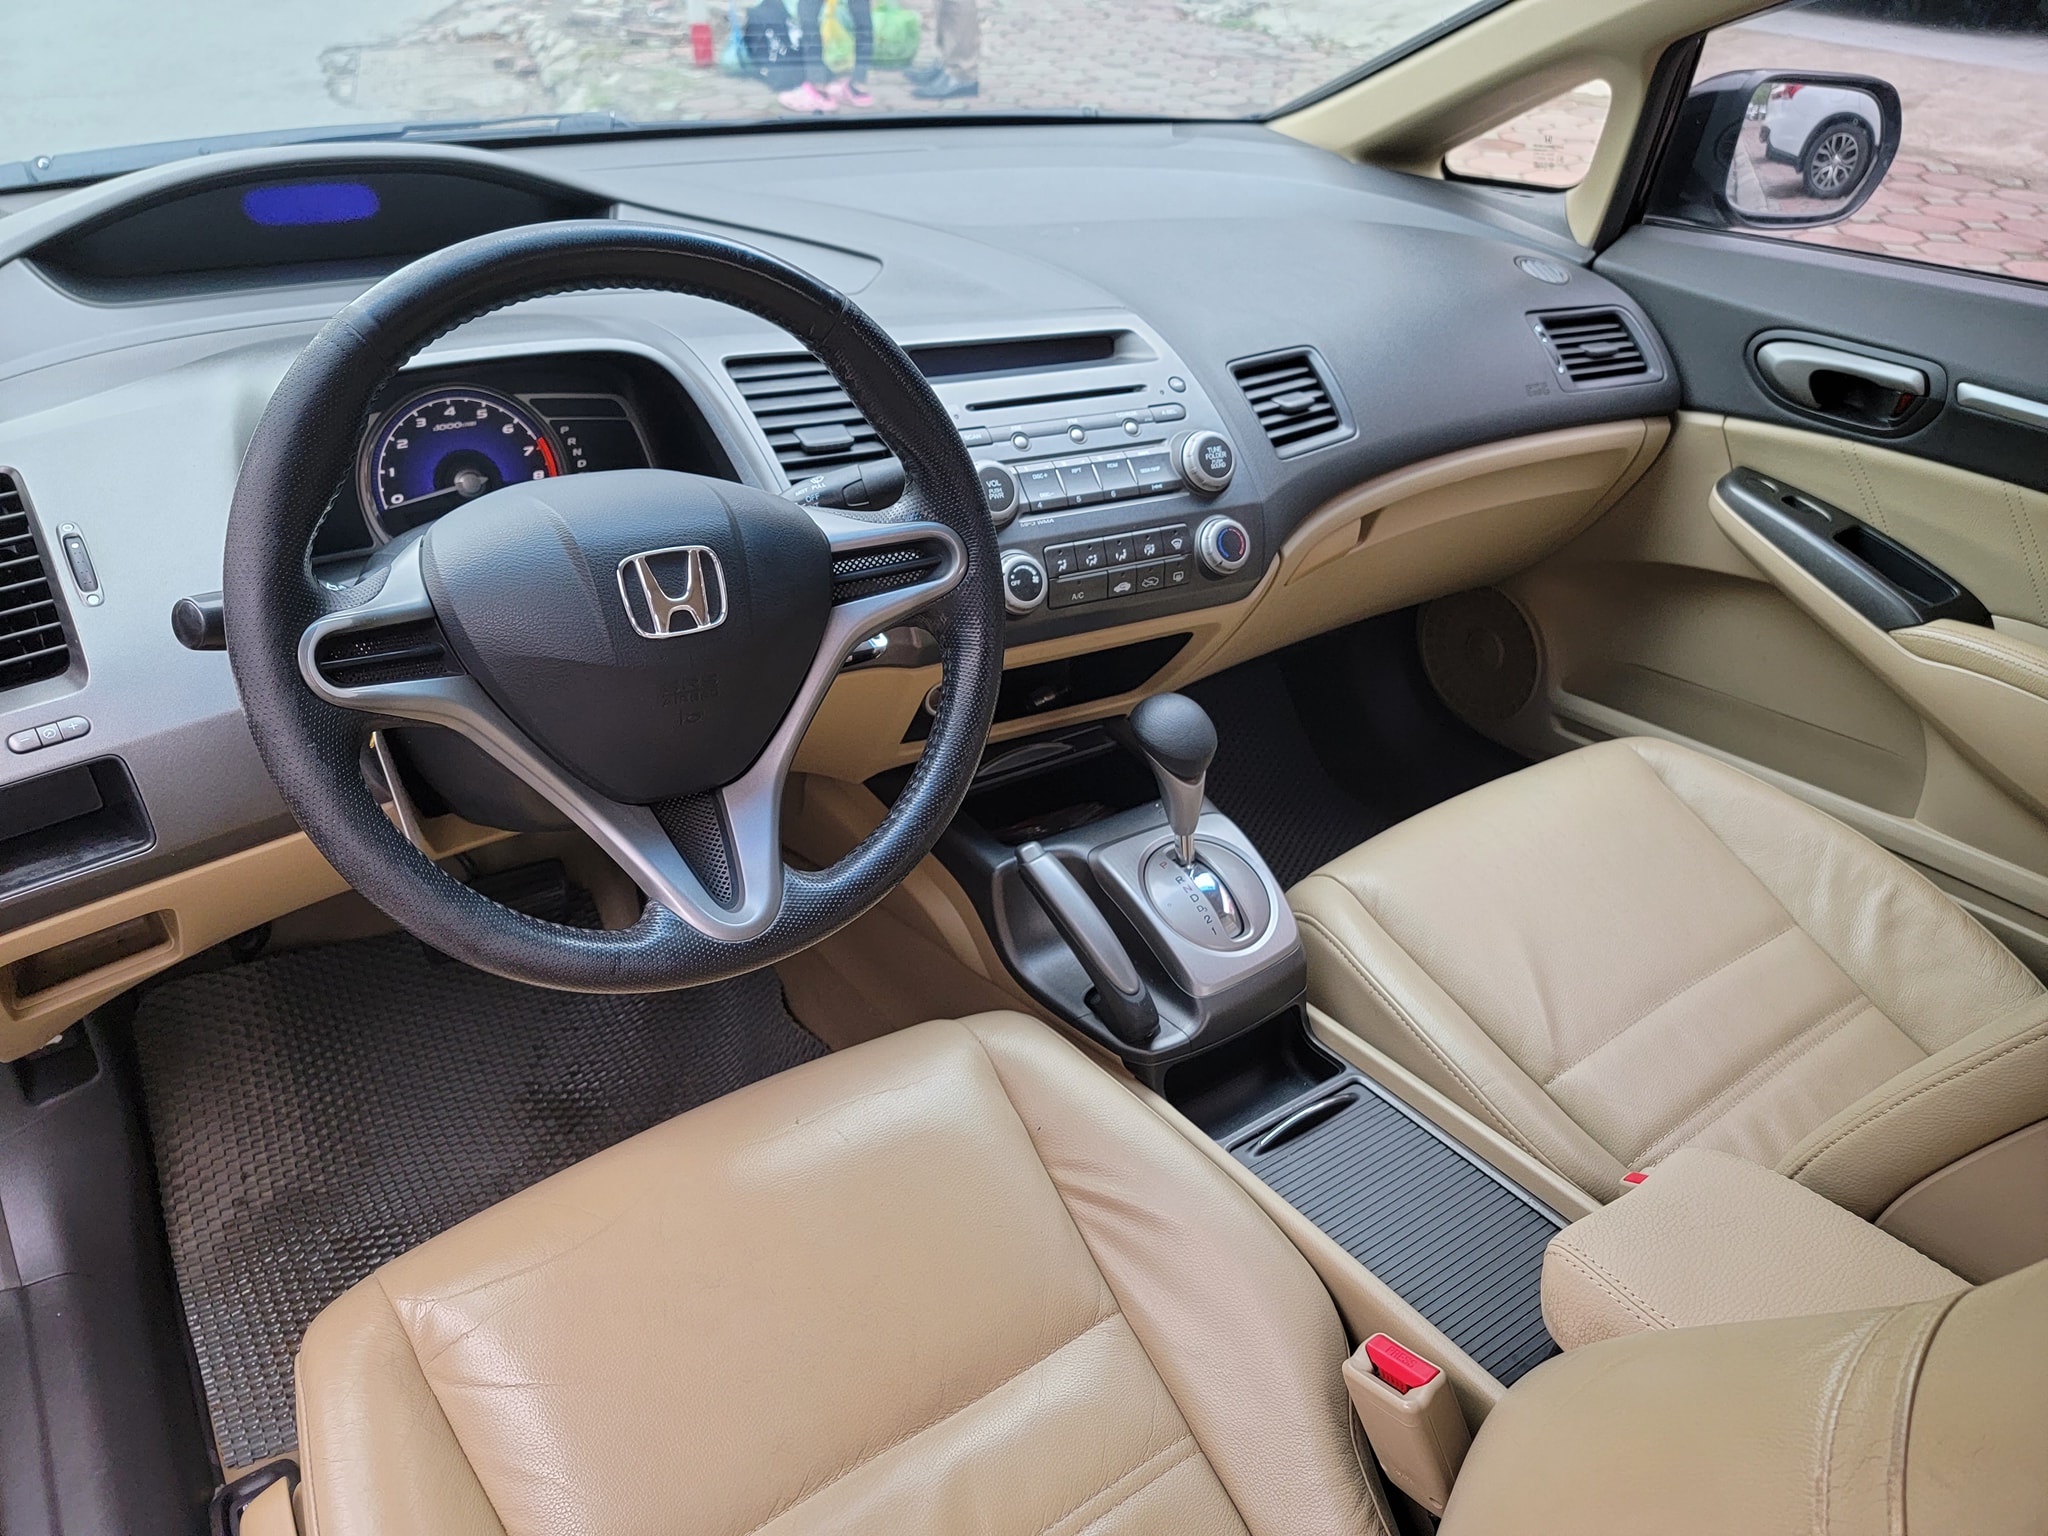 2009 Honda Civic Sedan Interior Photos  CarBuzz